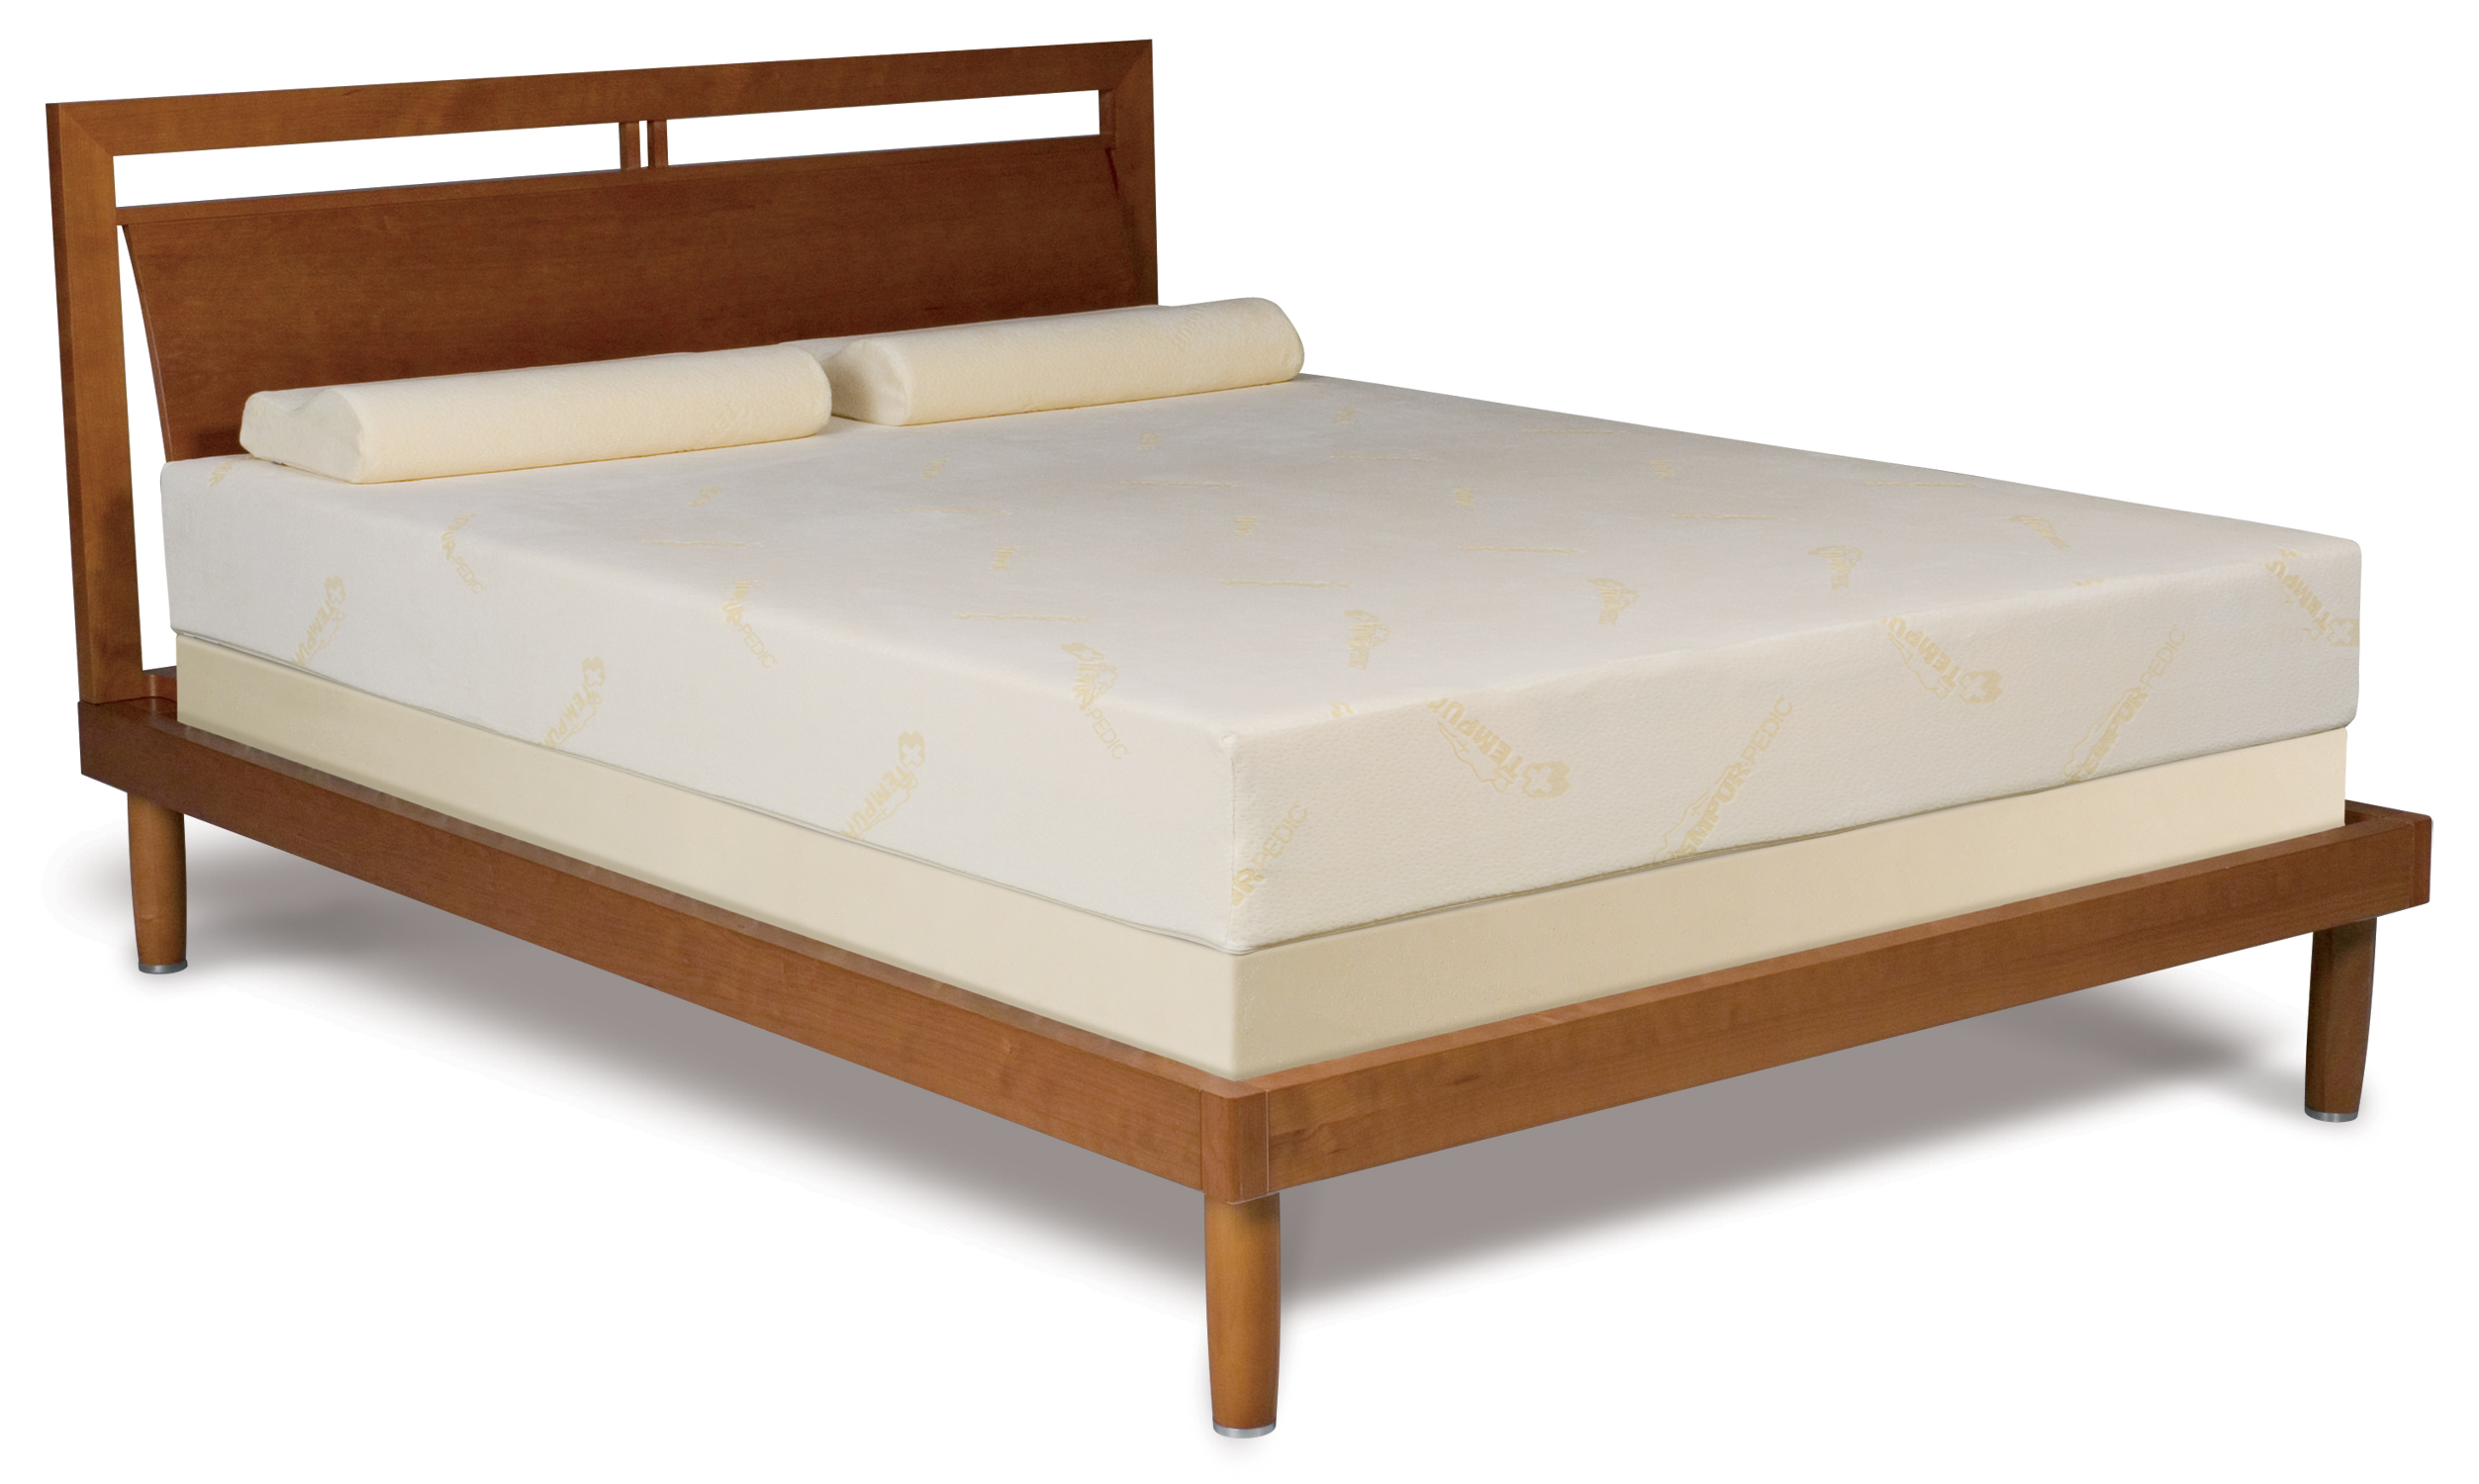 temperpedic mattresses on sale